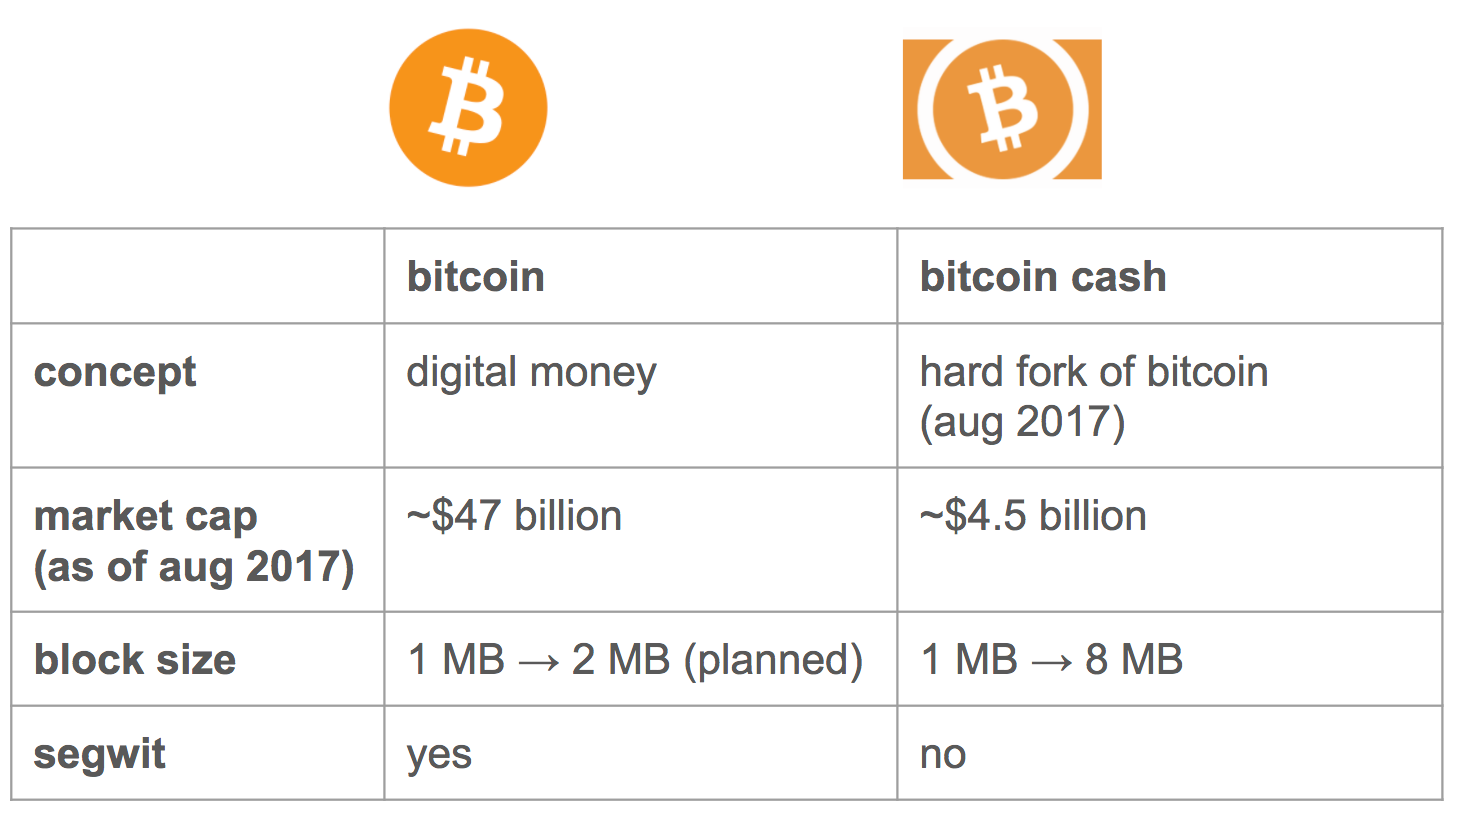 Bitcoin Cash Price Prediction 2019: Bad in Short-Term, Positive in Long-Term